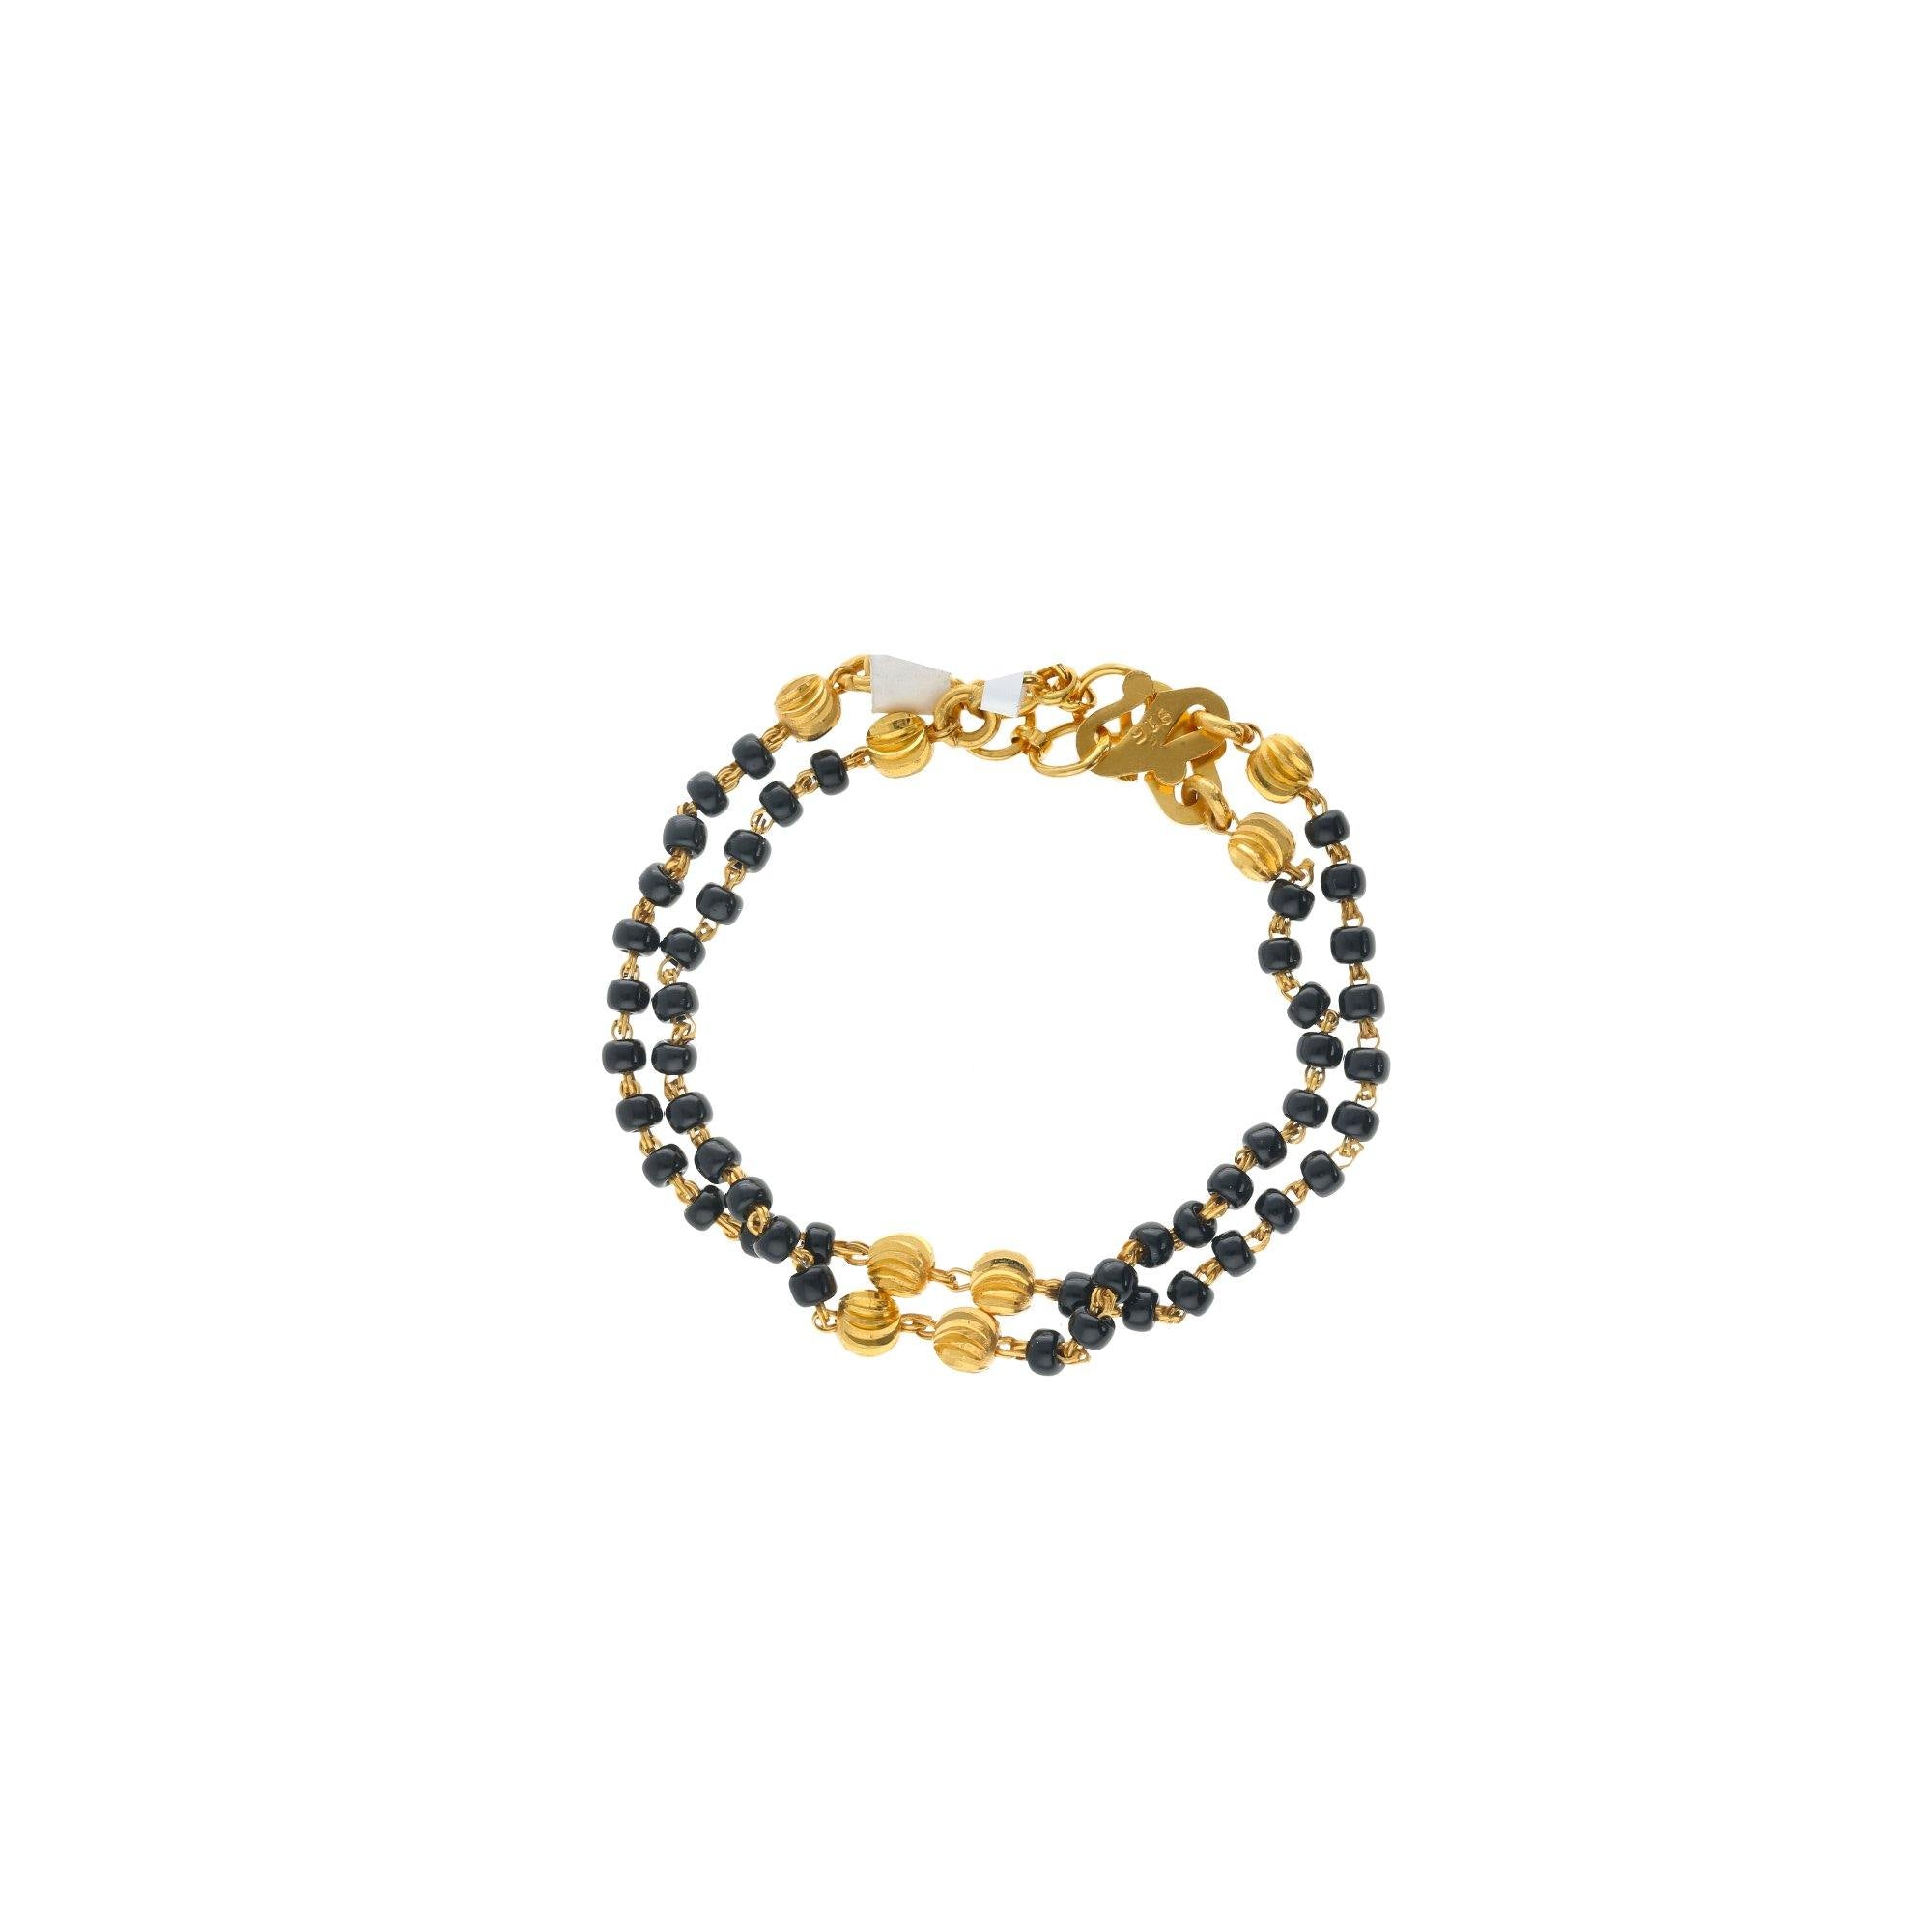 Buy Gold Bracelets Designs Online for Baby Girl and Boy - Viabhav Jewellers